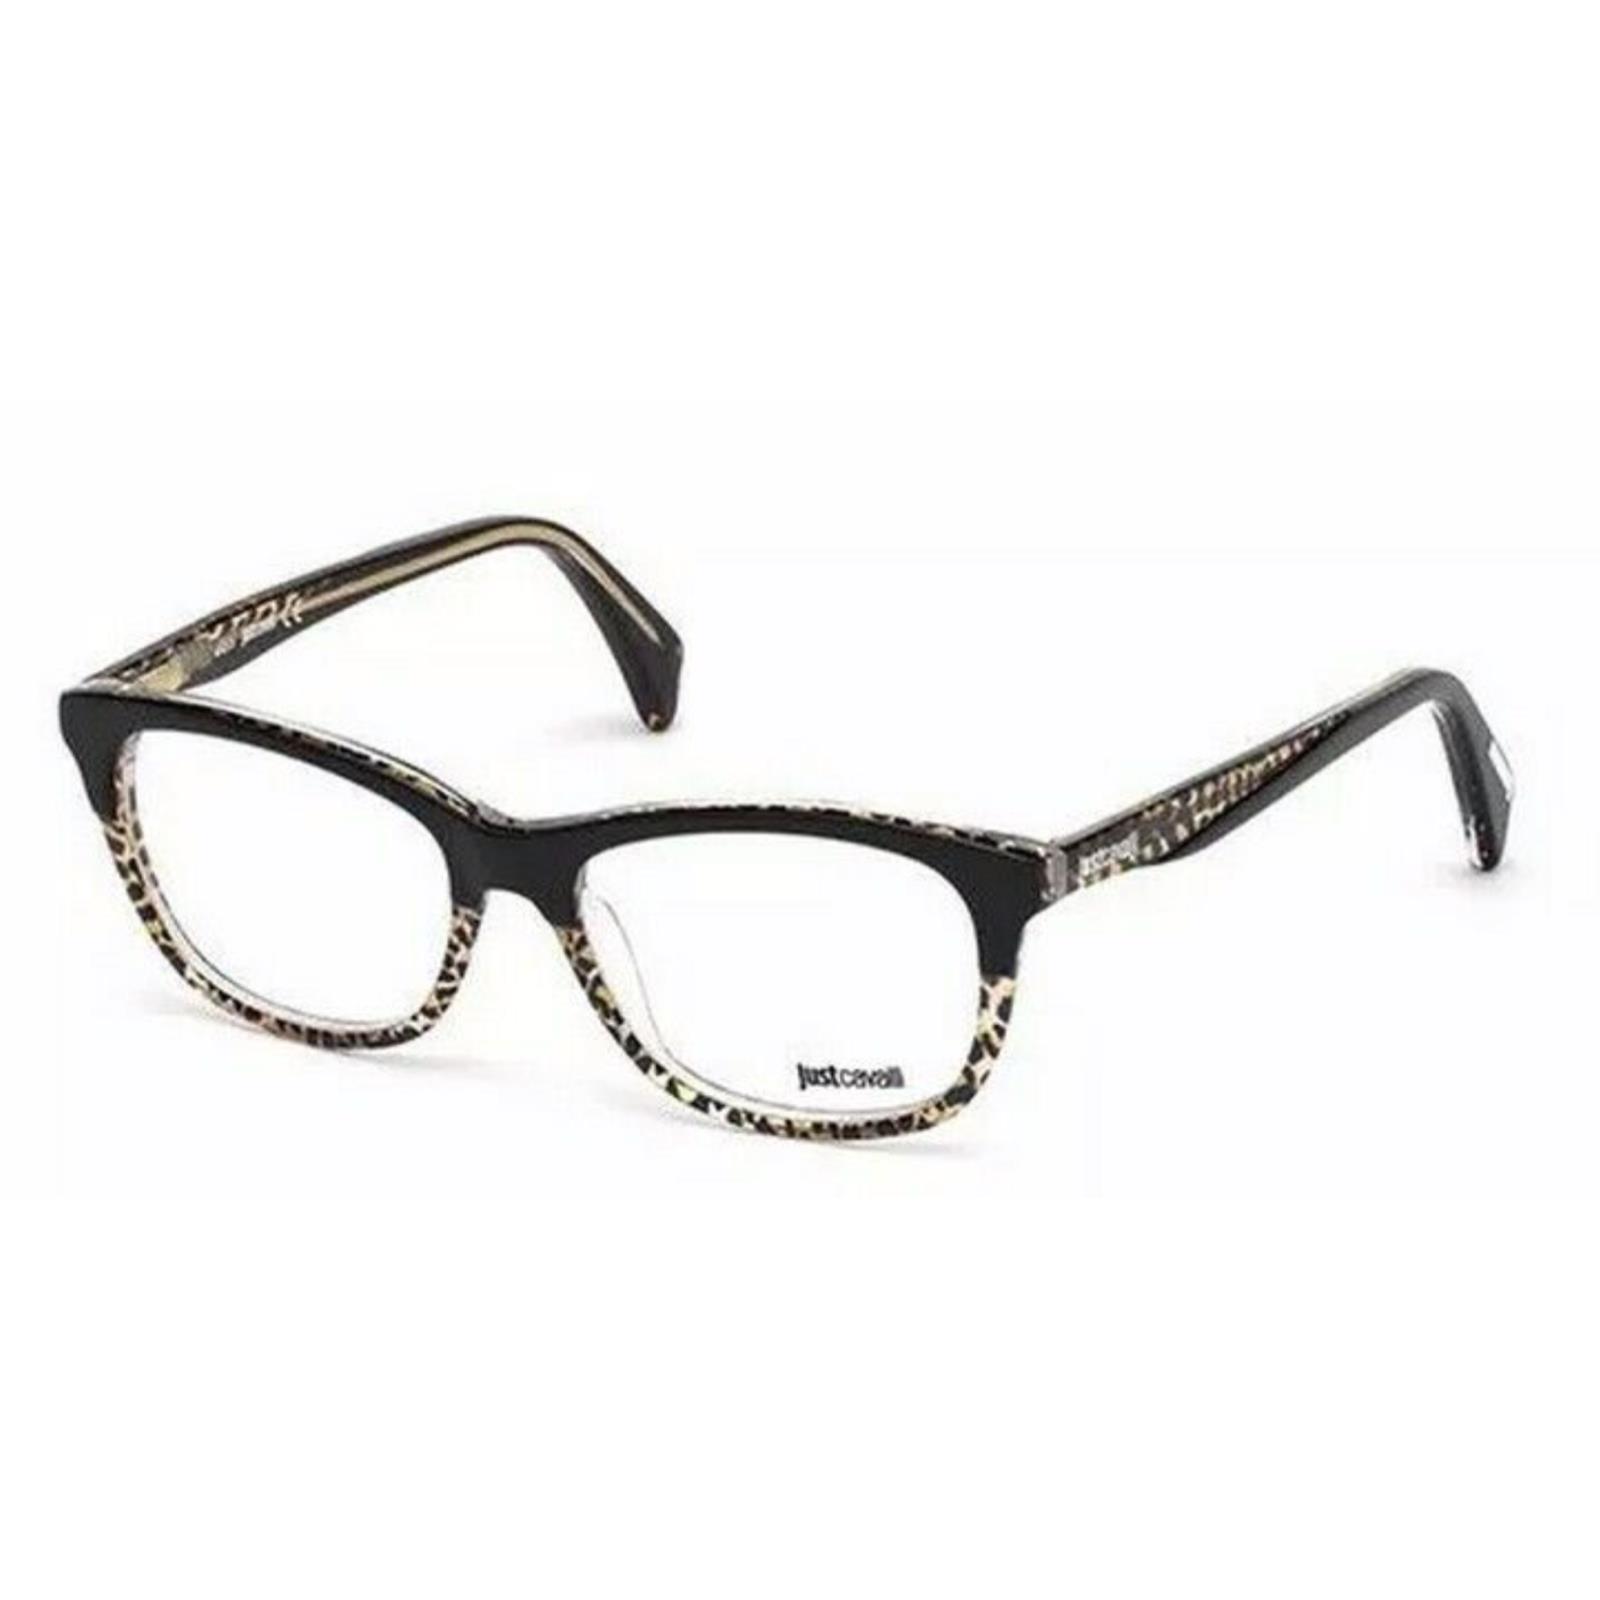 Just Cavalli Eyeglasses JC0749 047 52-16 140 Black Leopard Cat-eye Frames